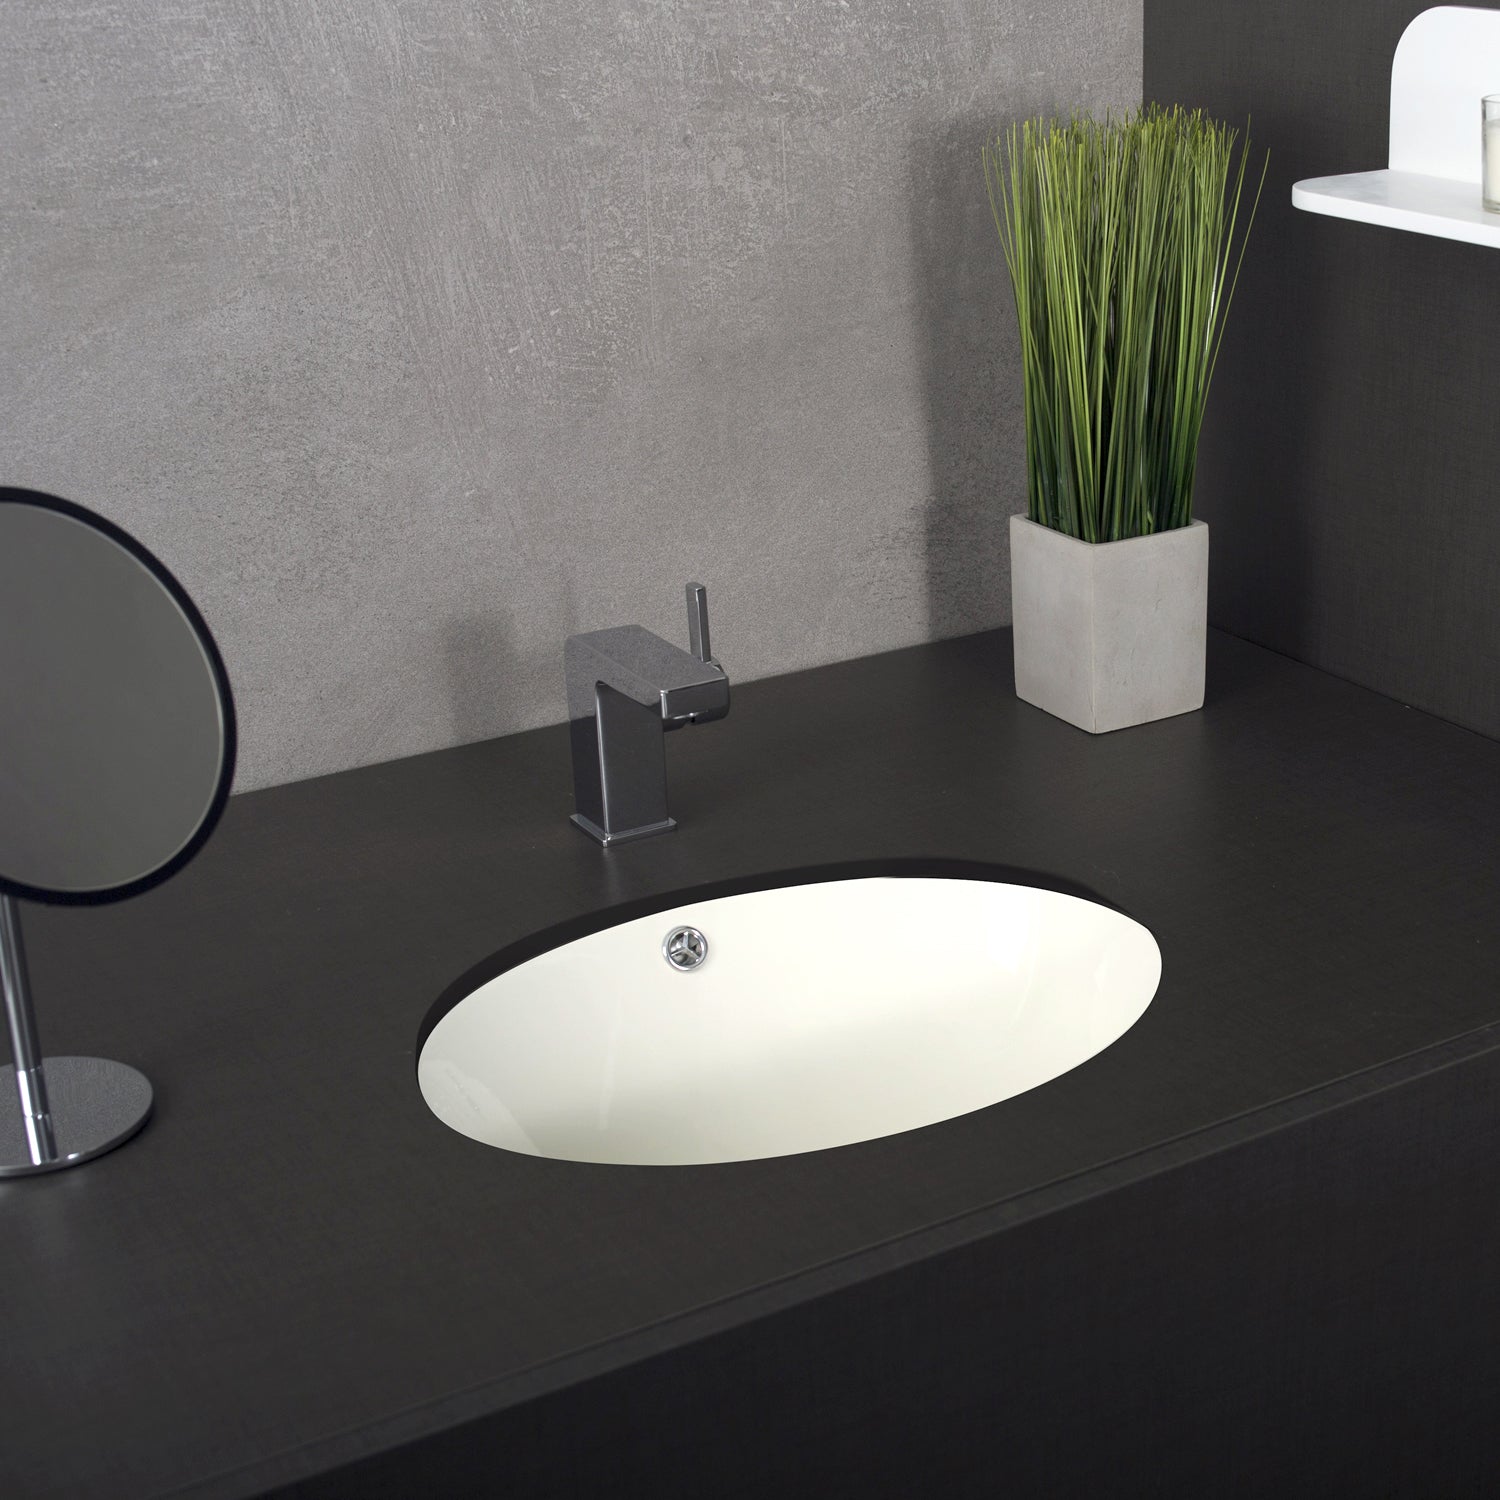 DAX Ceramic Oval Single Bowl Undermount Bathroom Sink, Ivory Finish, 19-1/2 x 16 x 8 Inches (BSN-201)